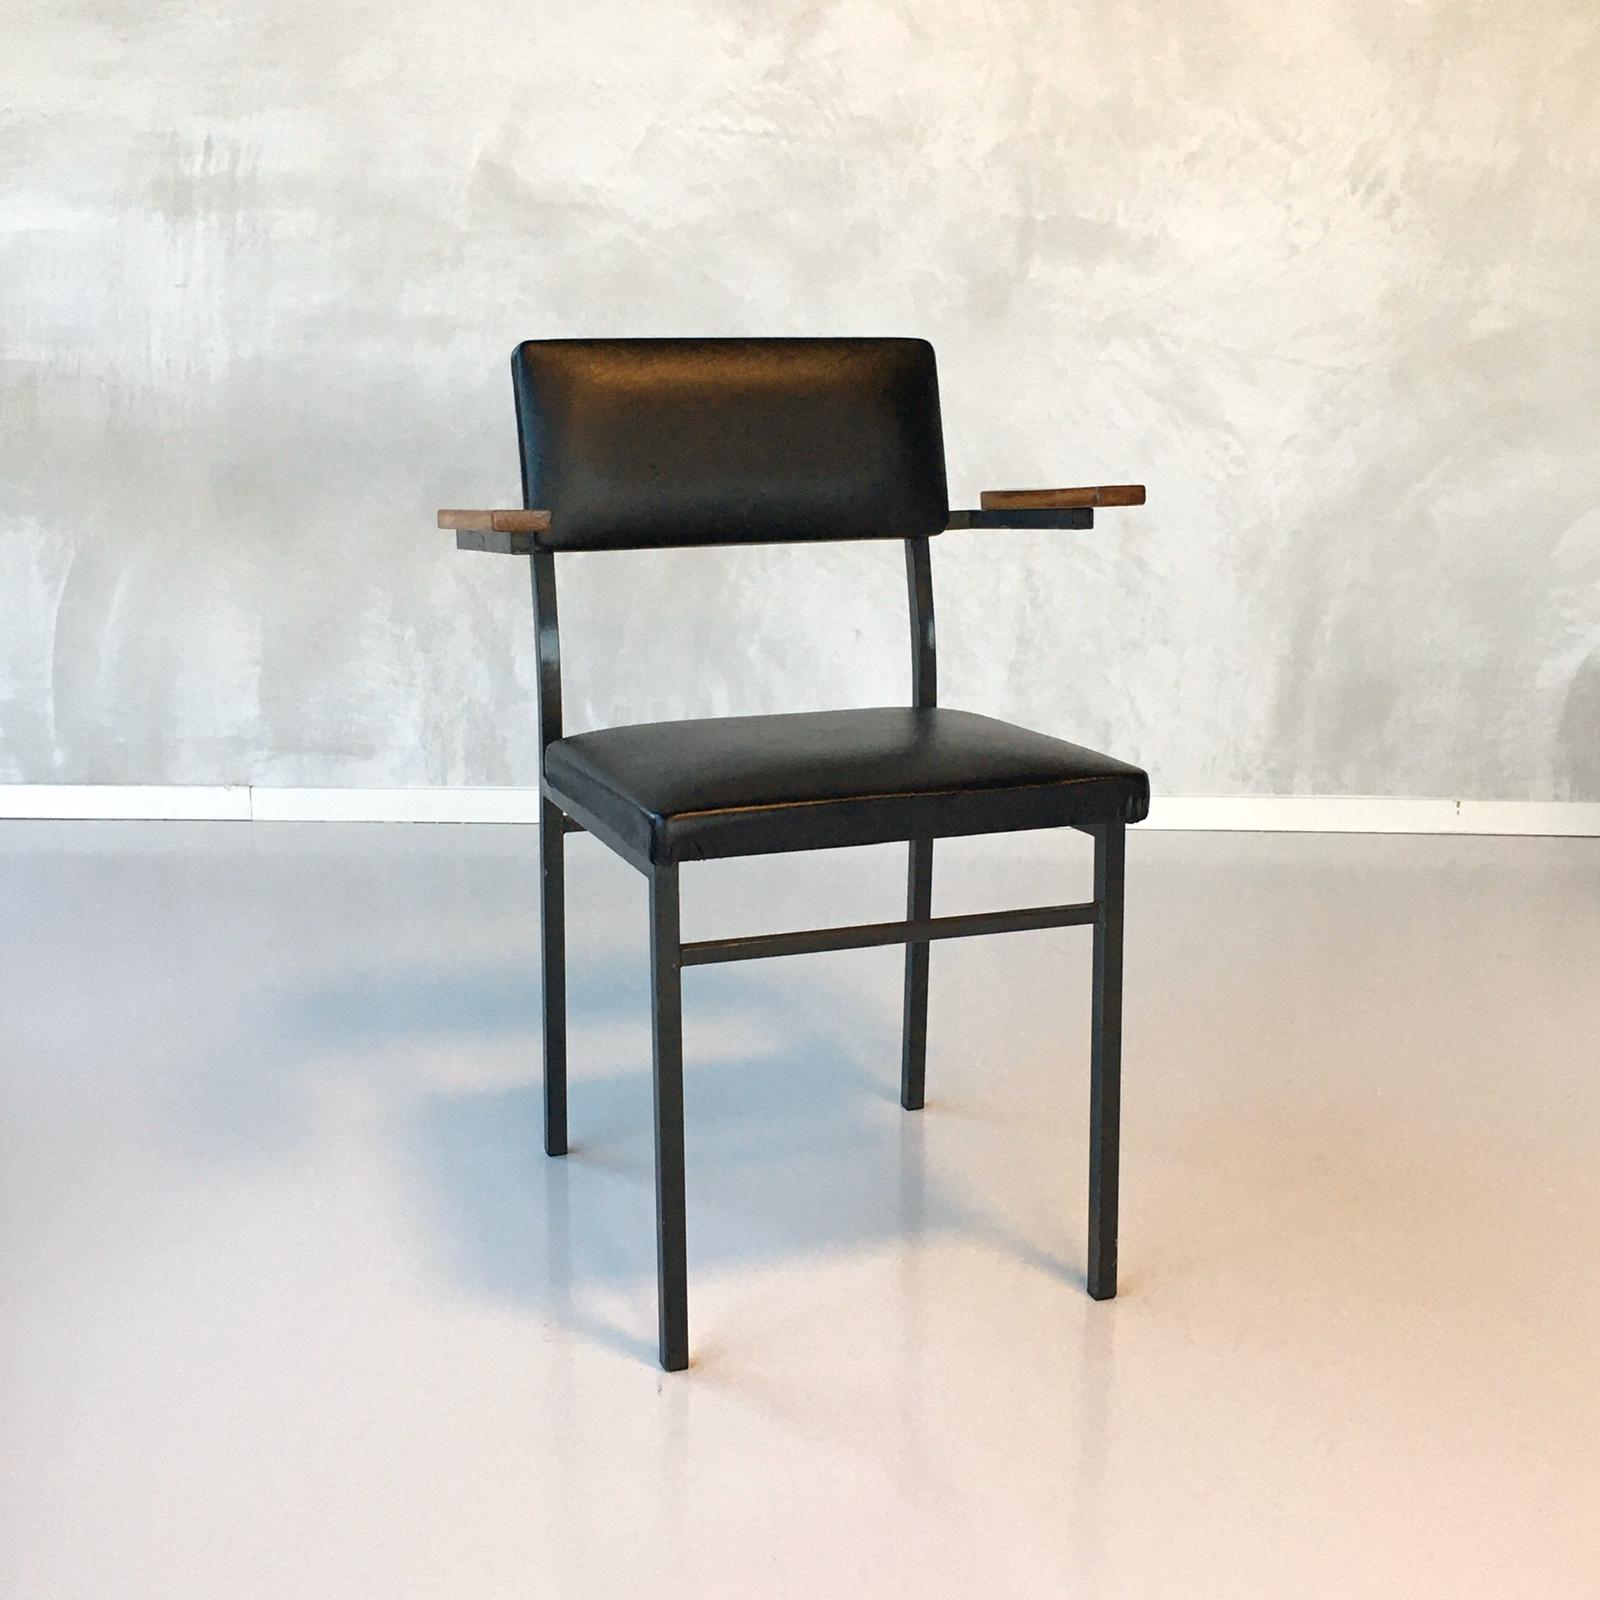 opraken Marxisme Creatie Strijk Design | Dé vintage stoelen specialist in Amsterdam